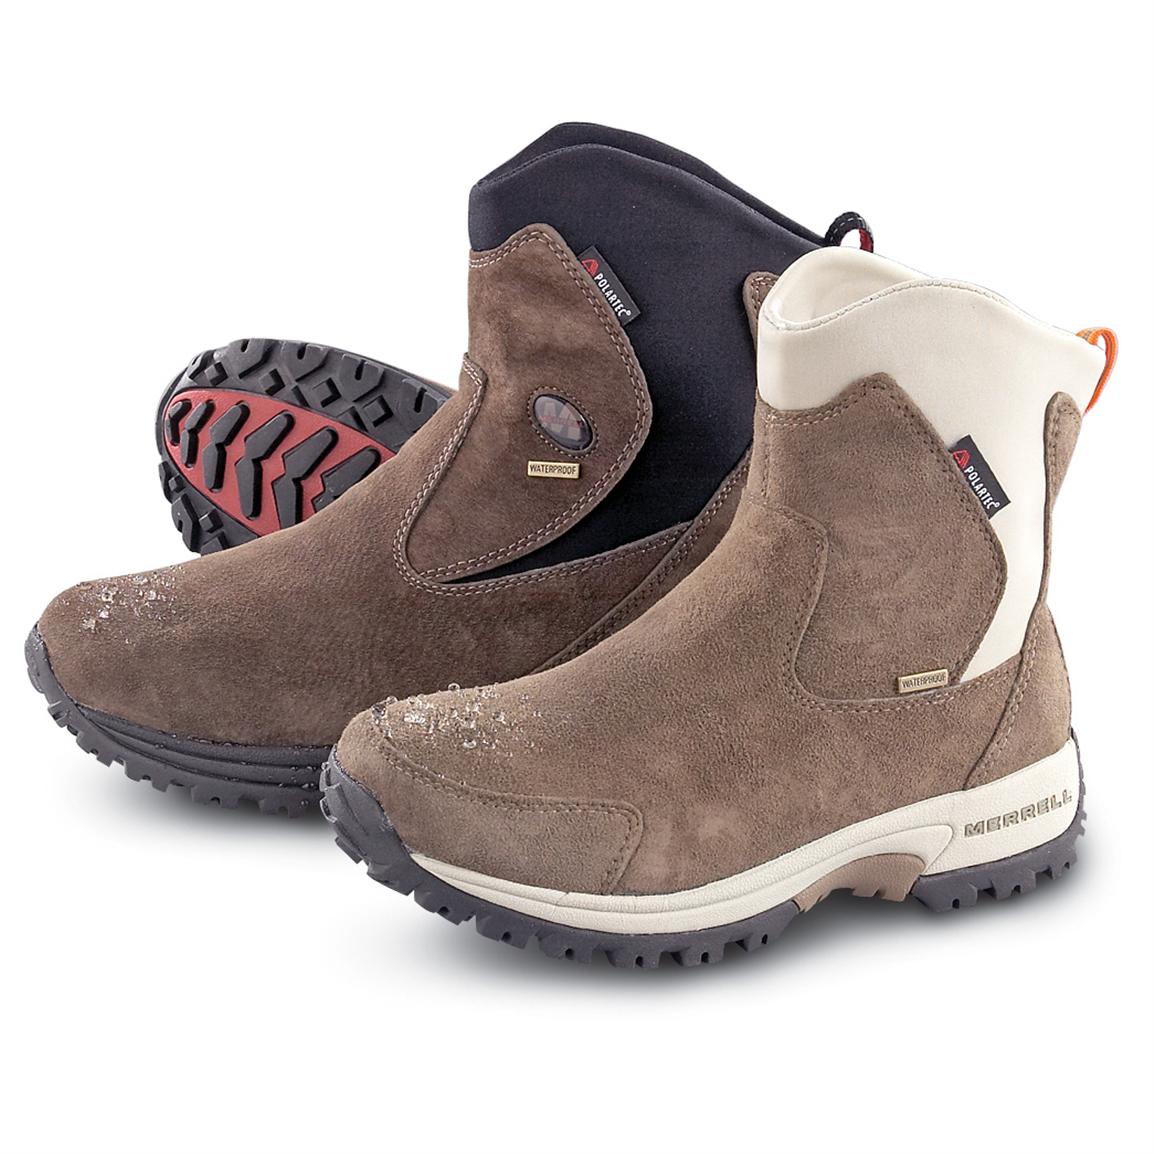 merrell thinsulate boots